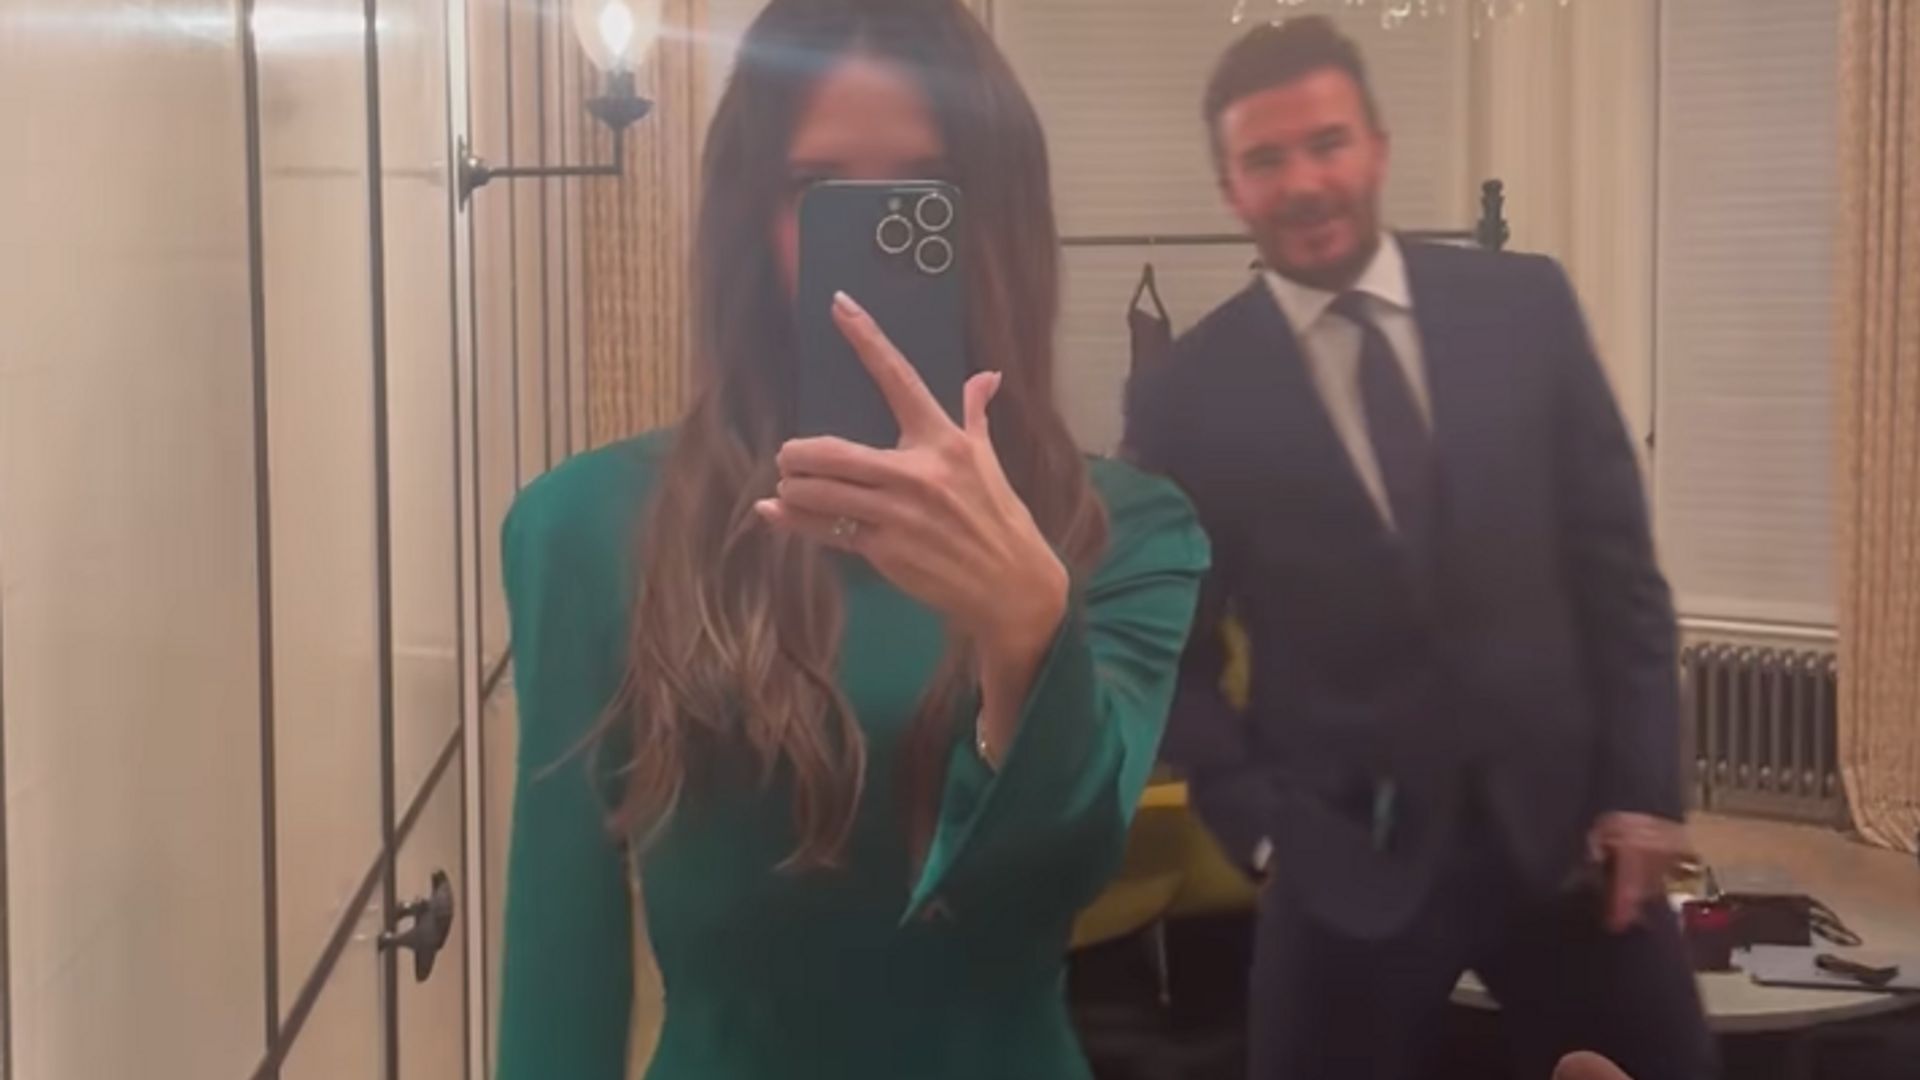 David Beckham photo bombs wife Victoria Beckham's NYE outfit video